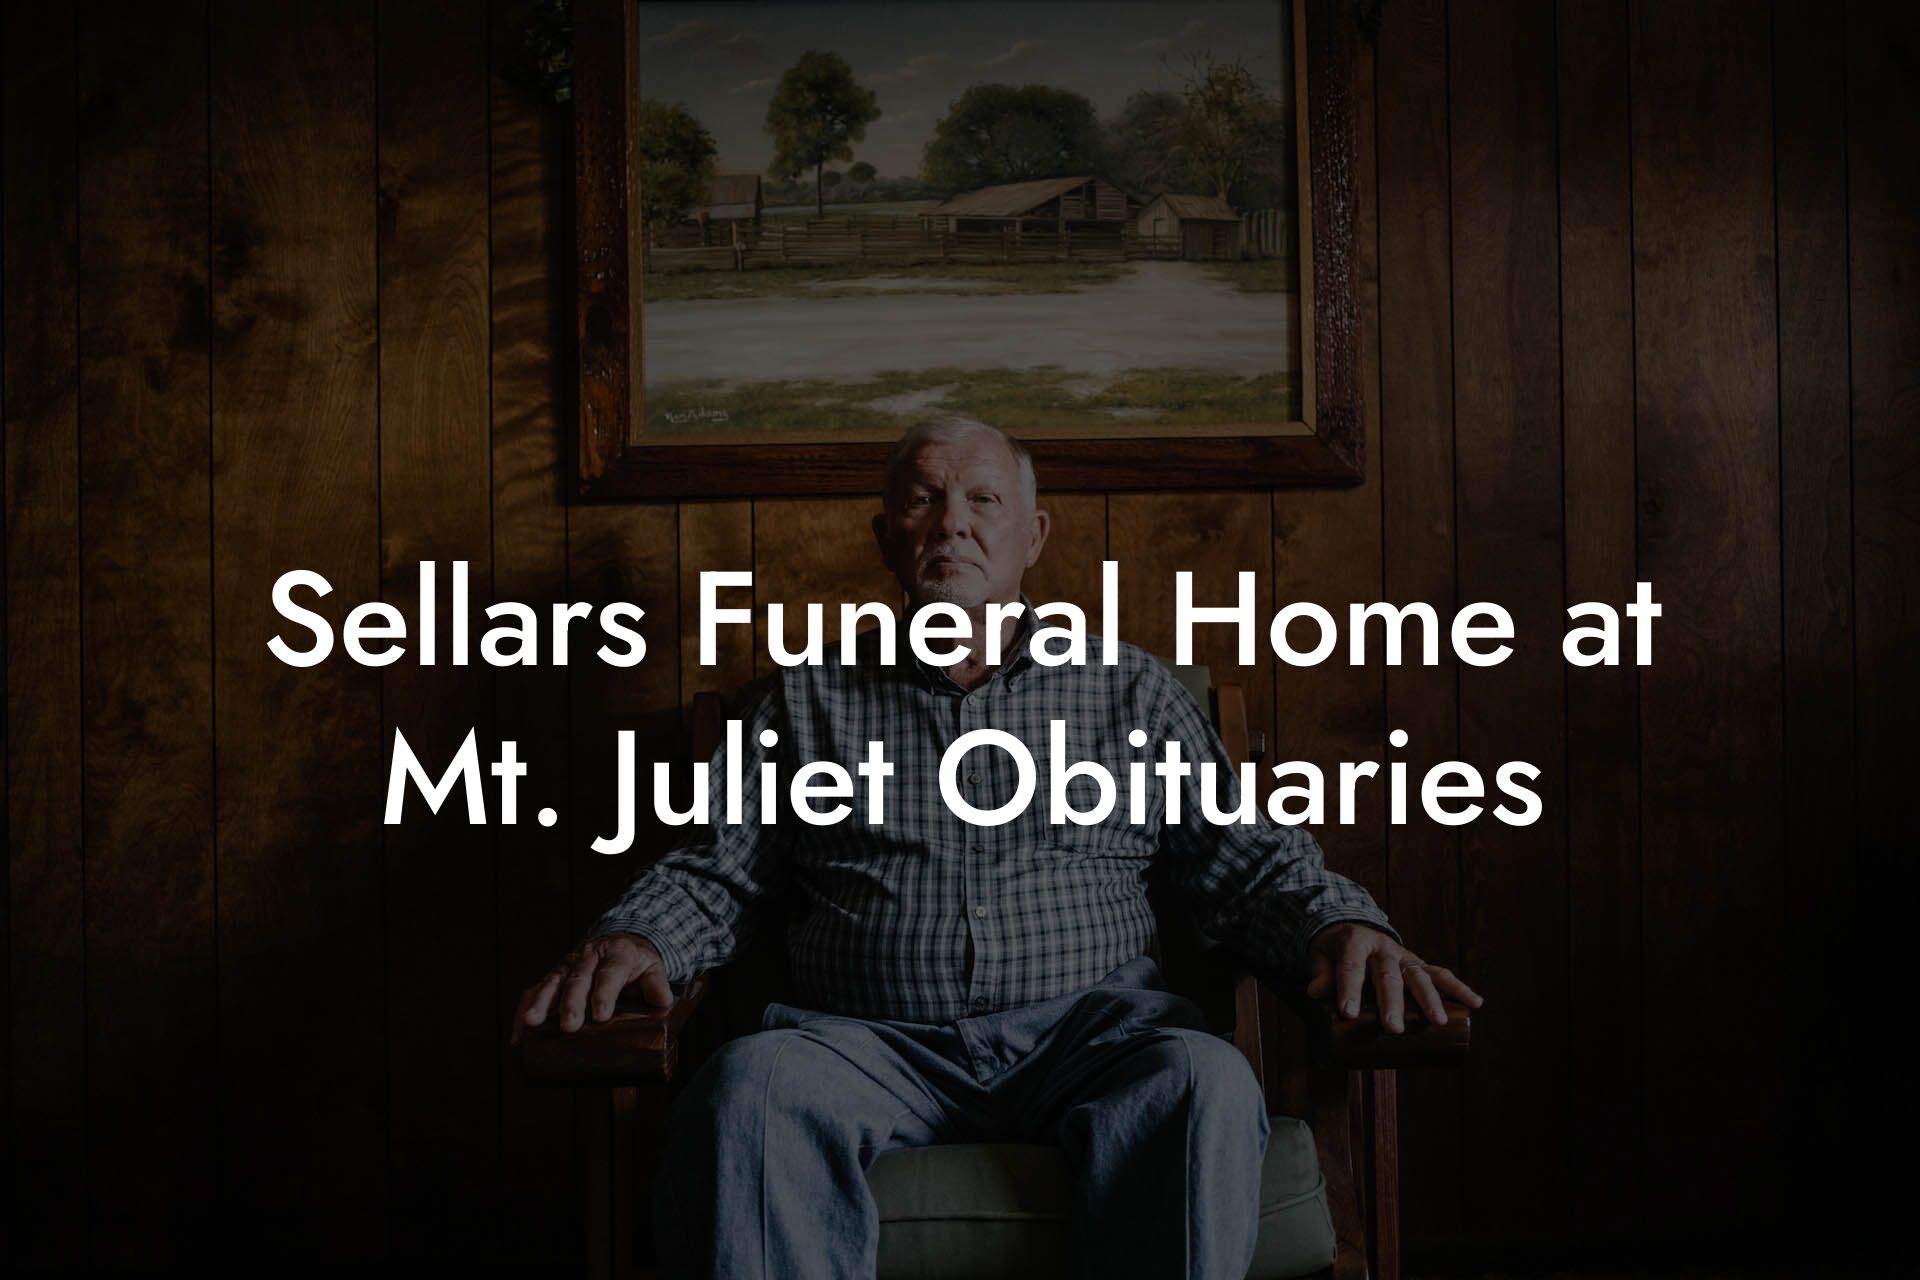 Sellars Funeral Home at Mt. Juliet Obituaries